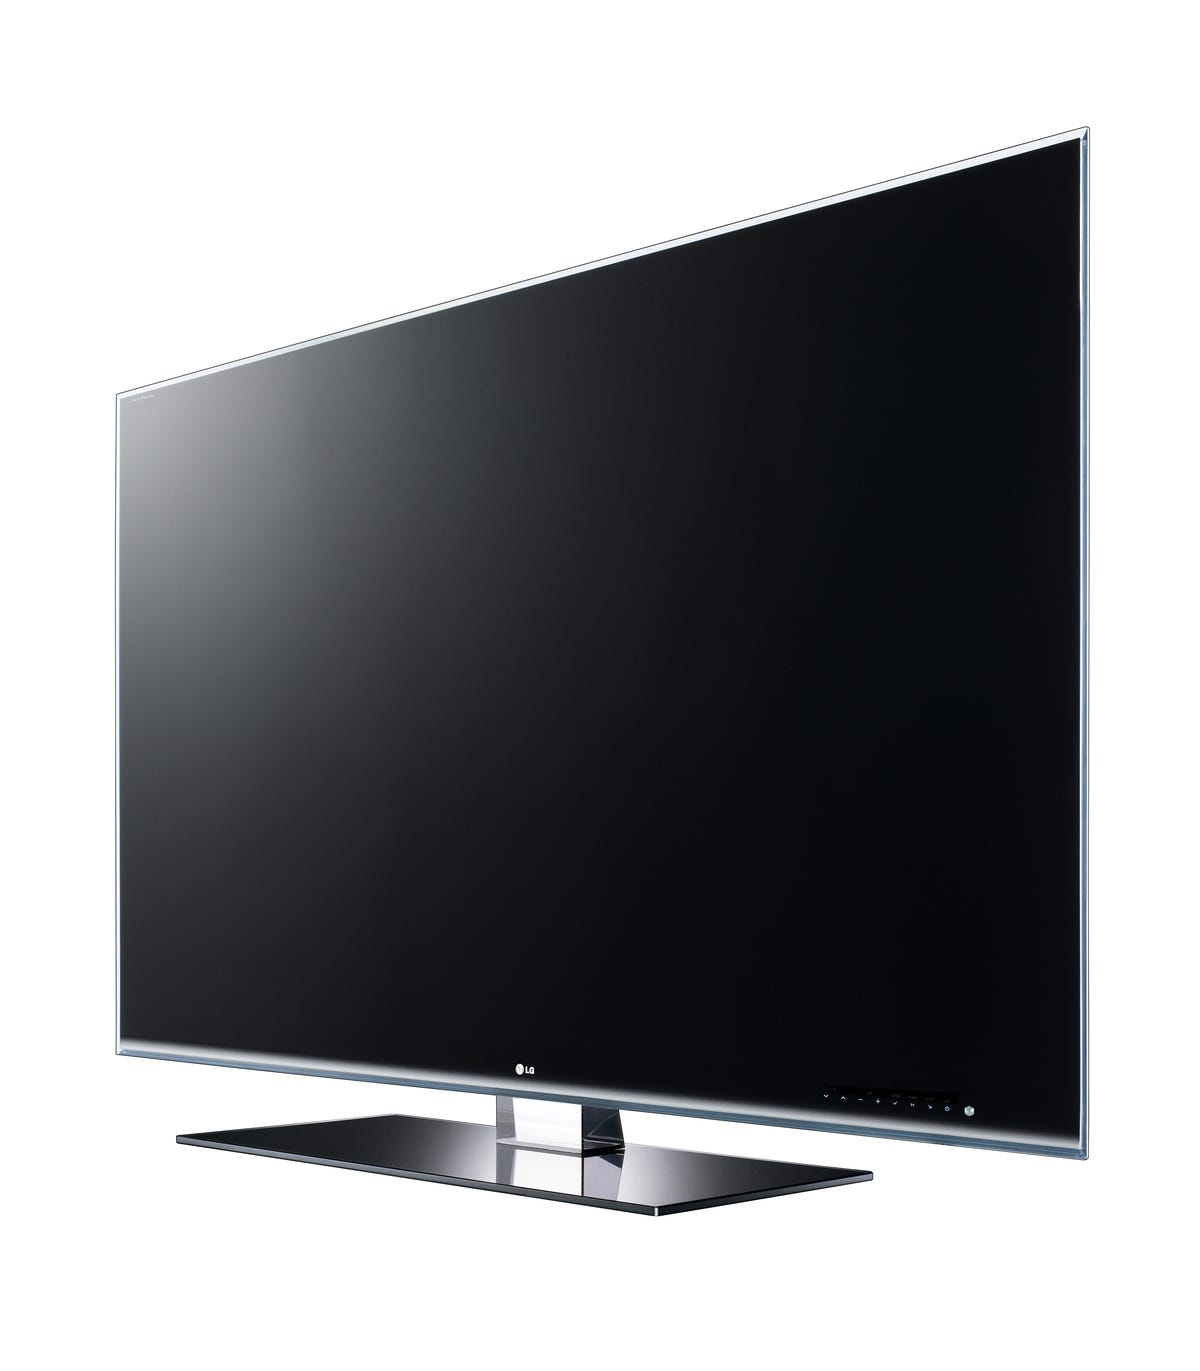 LG LW9500 series TV